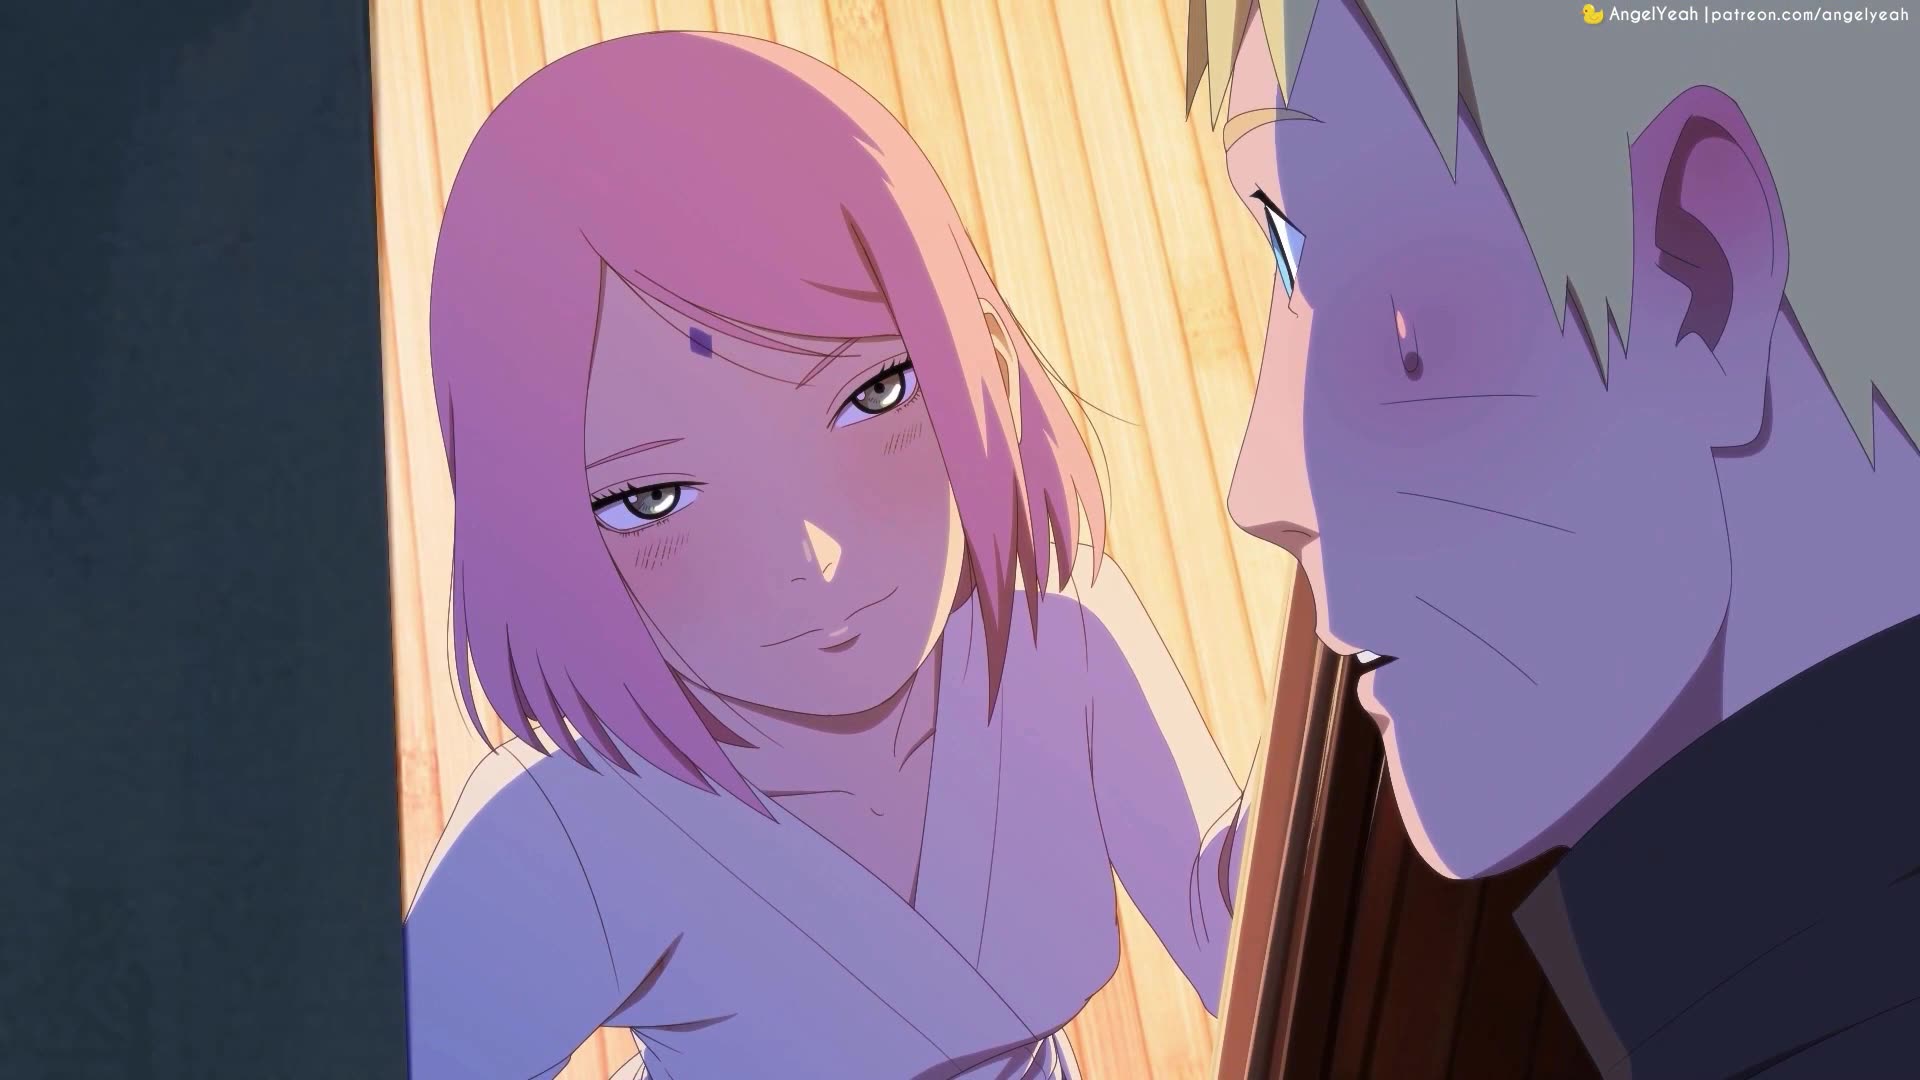 Oficial Sound) Sakura and Naruto - A visit 4Kangelyeah picture